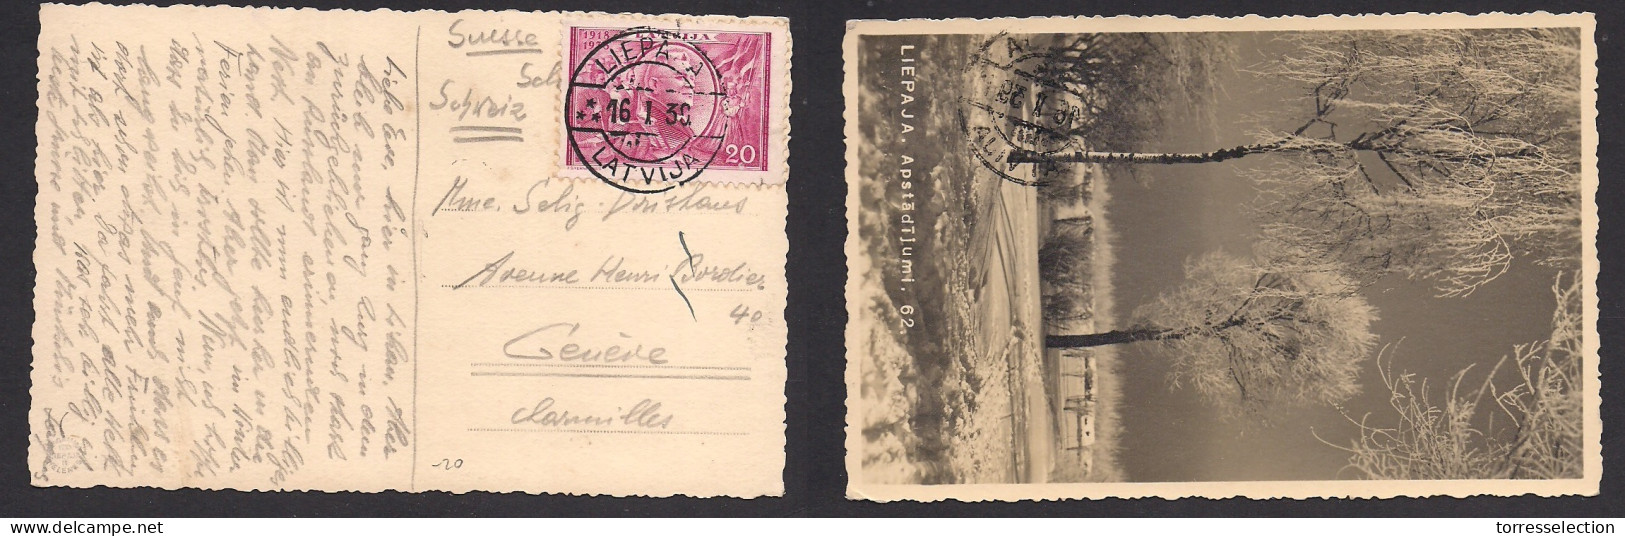 LATVIA. 1939 (16 Jan) Liepaja - Switzerland, Geneve. Single 20c Violet Fkd Ppc. Fine. - Lettonia